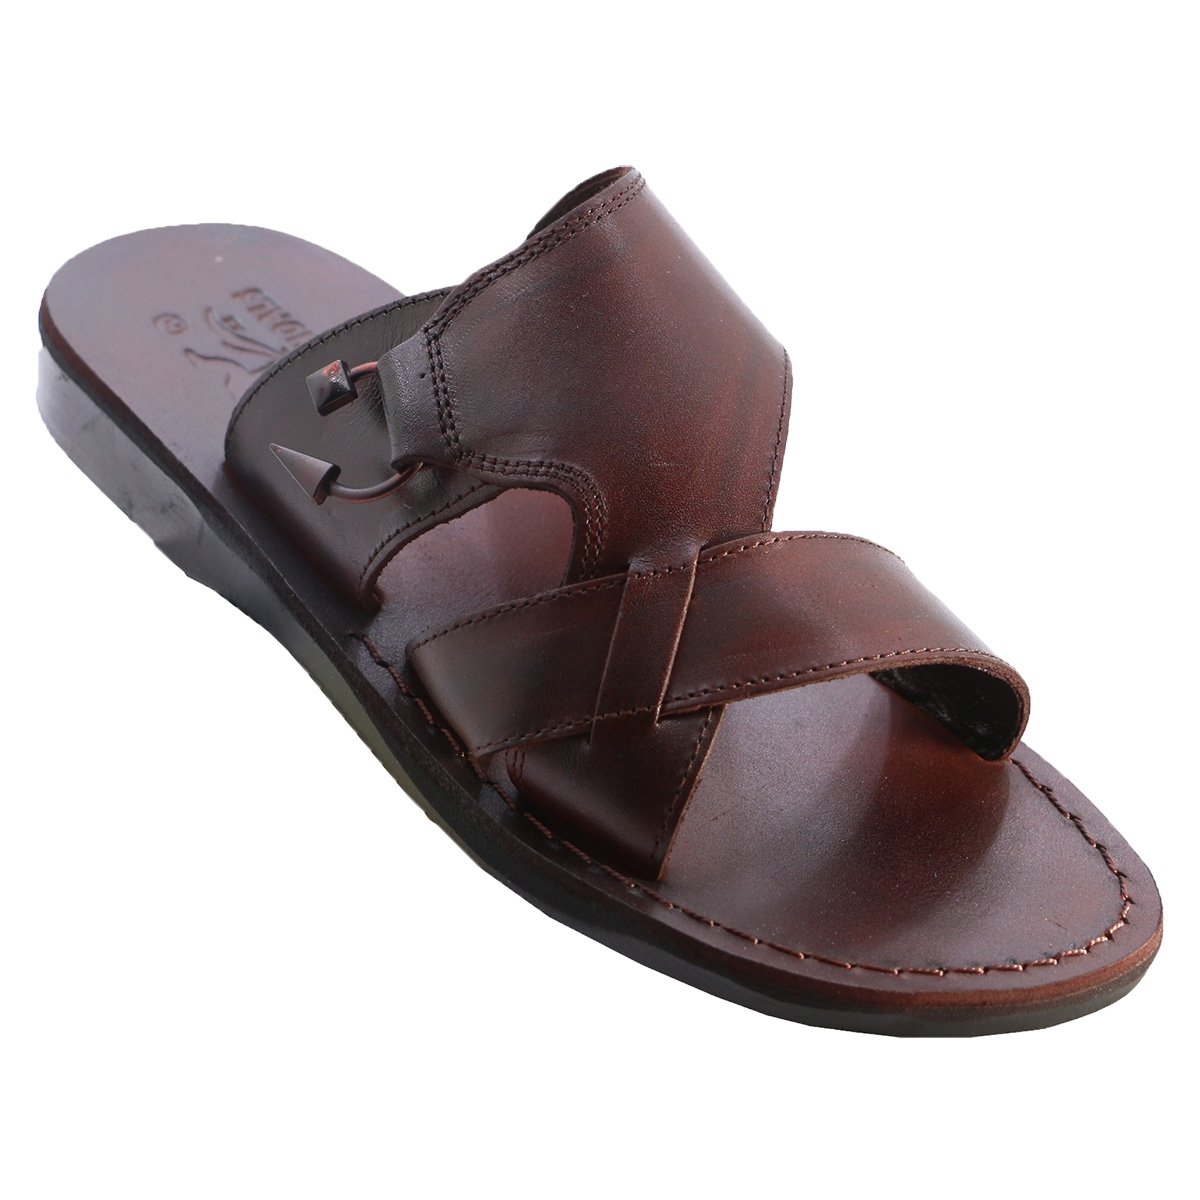 Zed Handmade Leather Jesus Sandals - For Men - 1